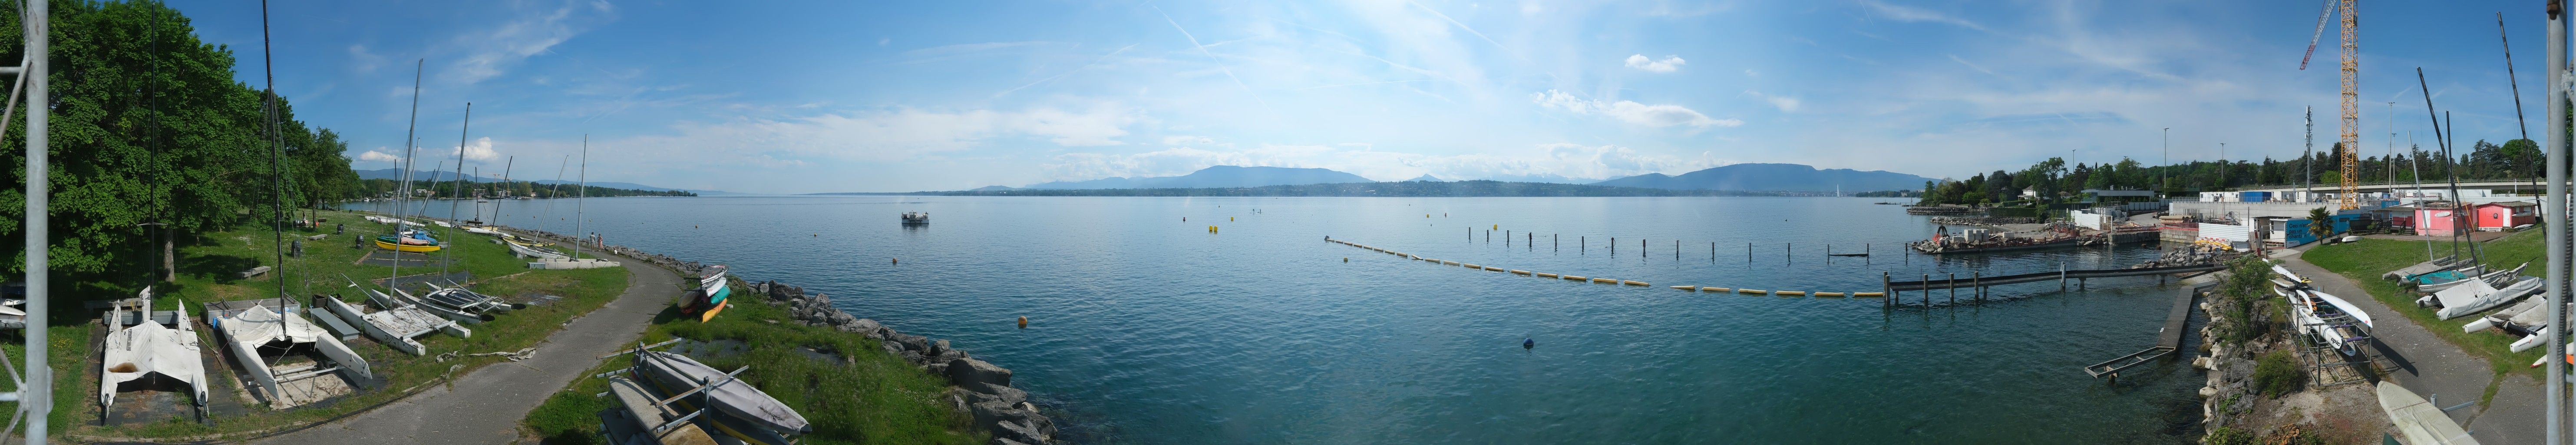 Bellevue: Cologny - The Geneva Water Fountain - Geneva - Les Voirons - Salève - Le Môle - Lake Geneva - Mont Blanc - Mont Blanc